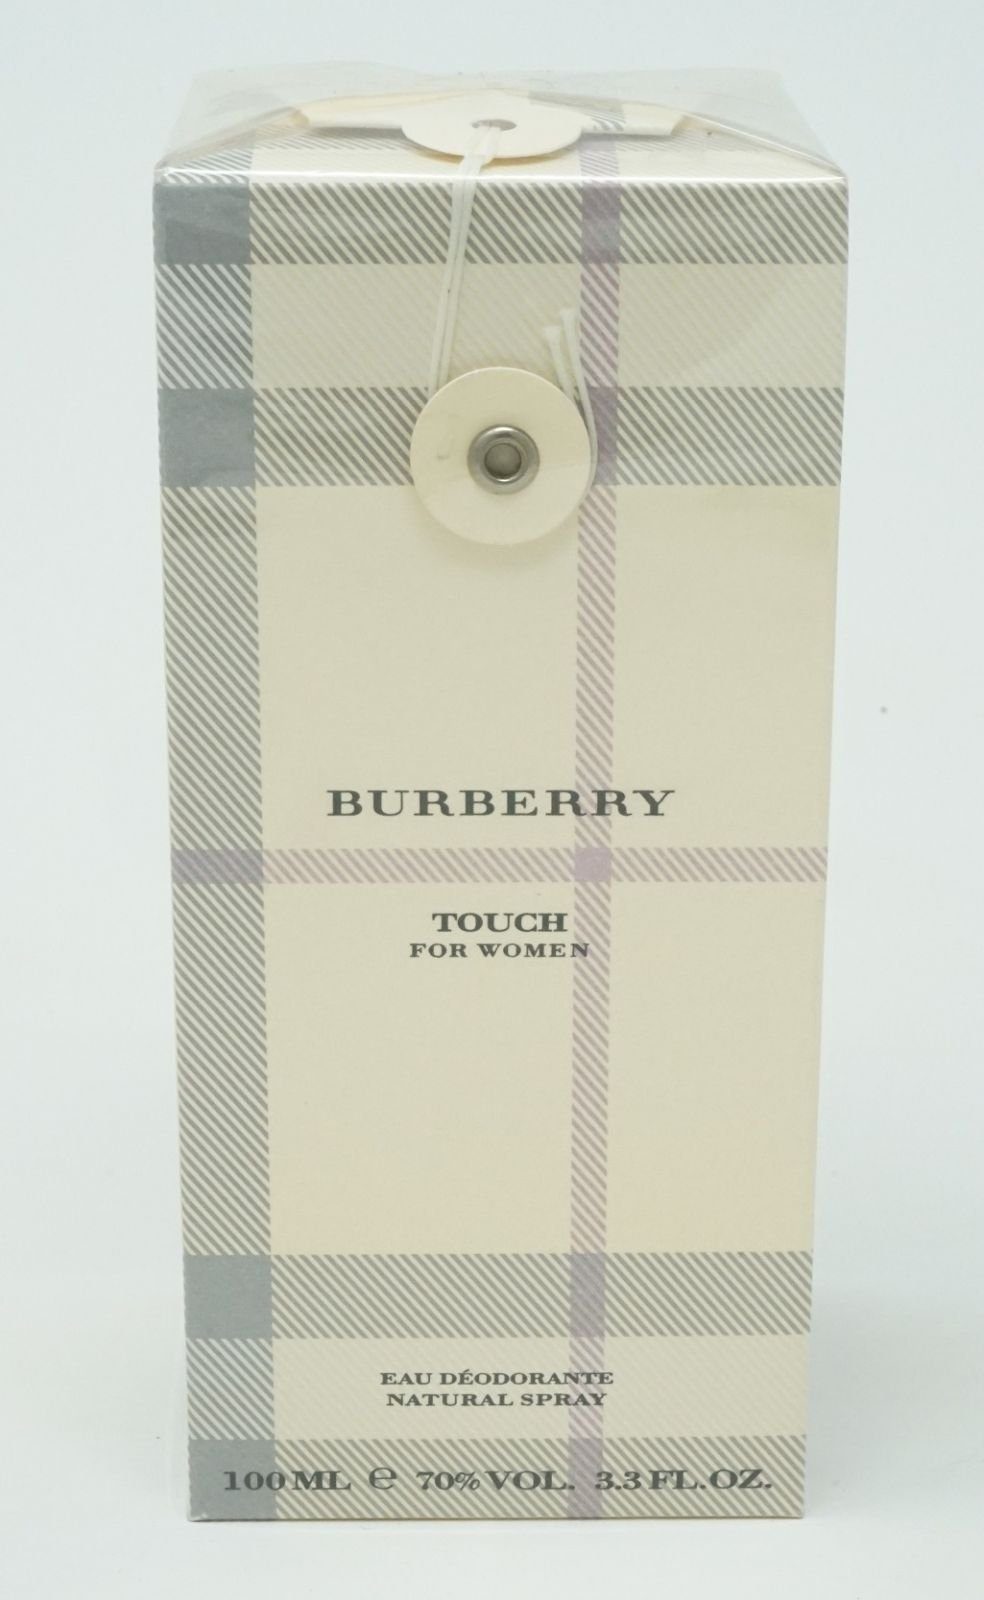 BURBERRY Körperspray Burberry Spray 100ml Women Deodorant For Touch